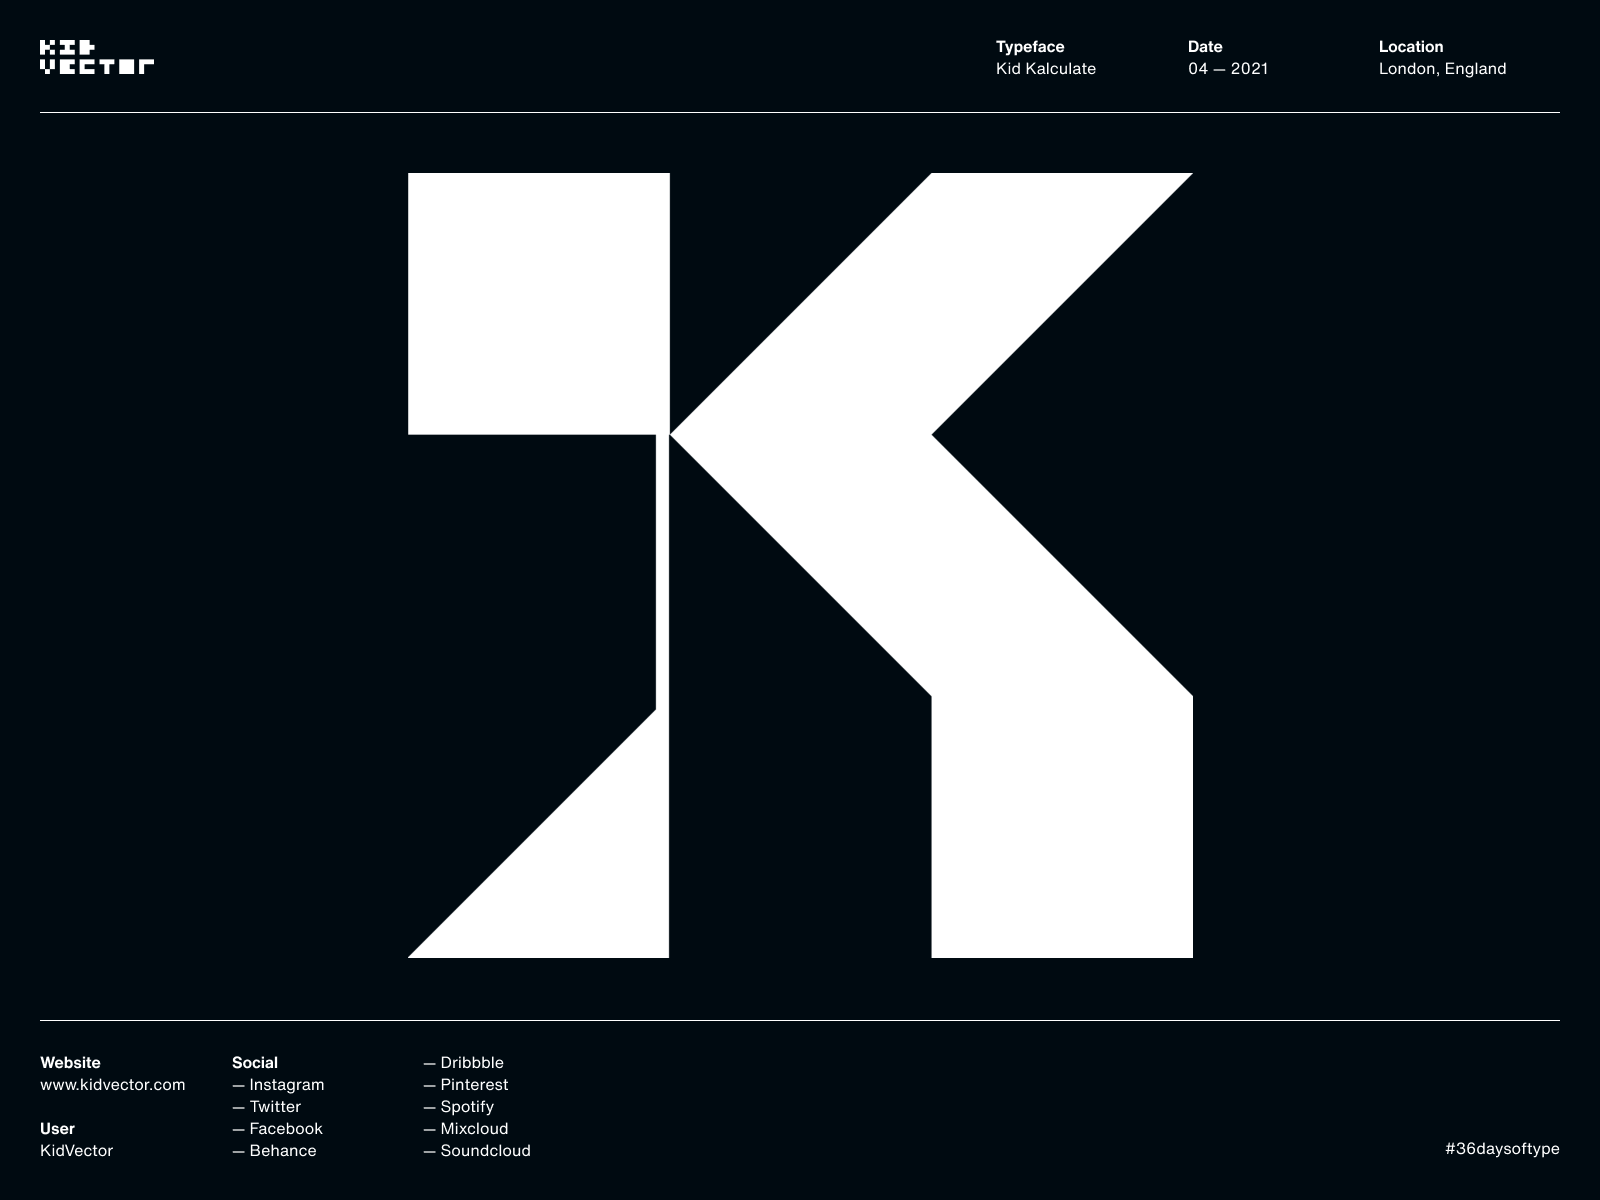 Kid Kalculate — K 36daysoftype 36daysoftype08 type typeface typography